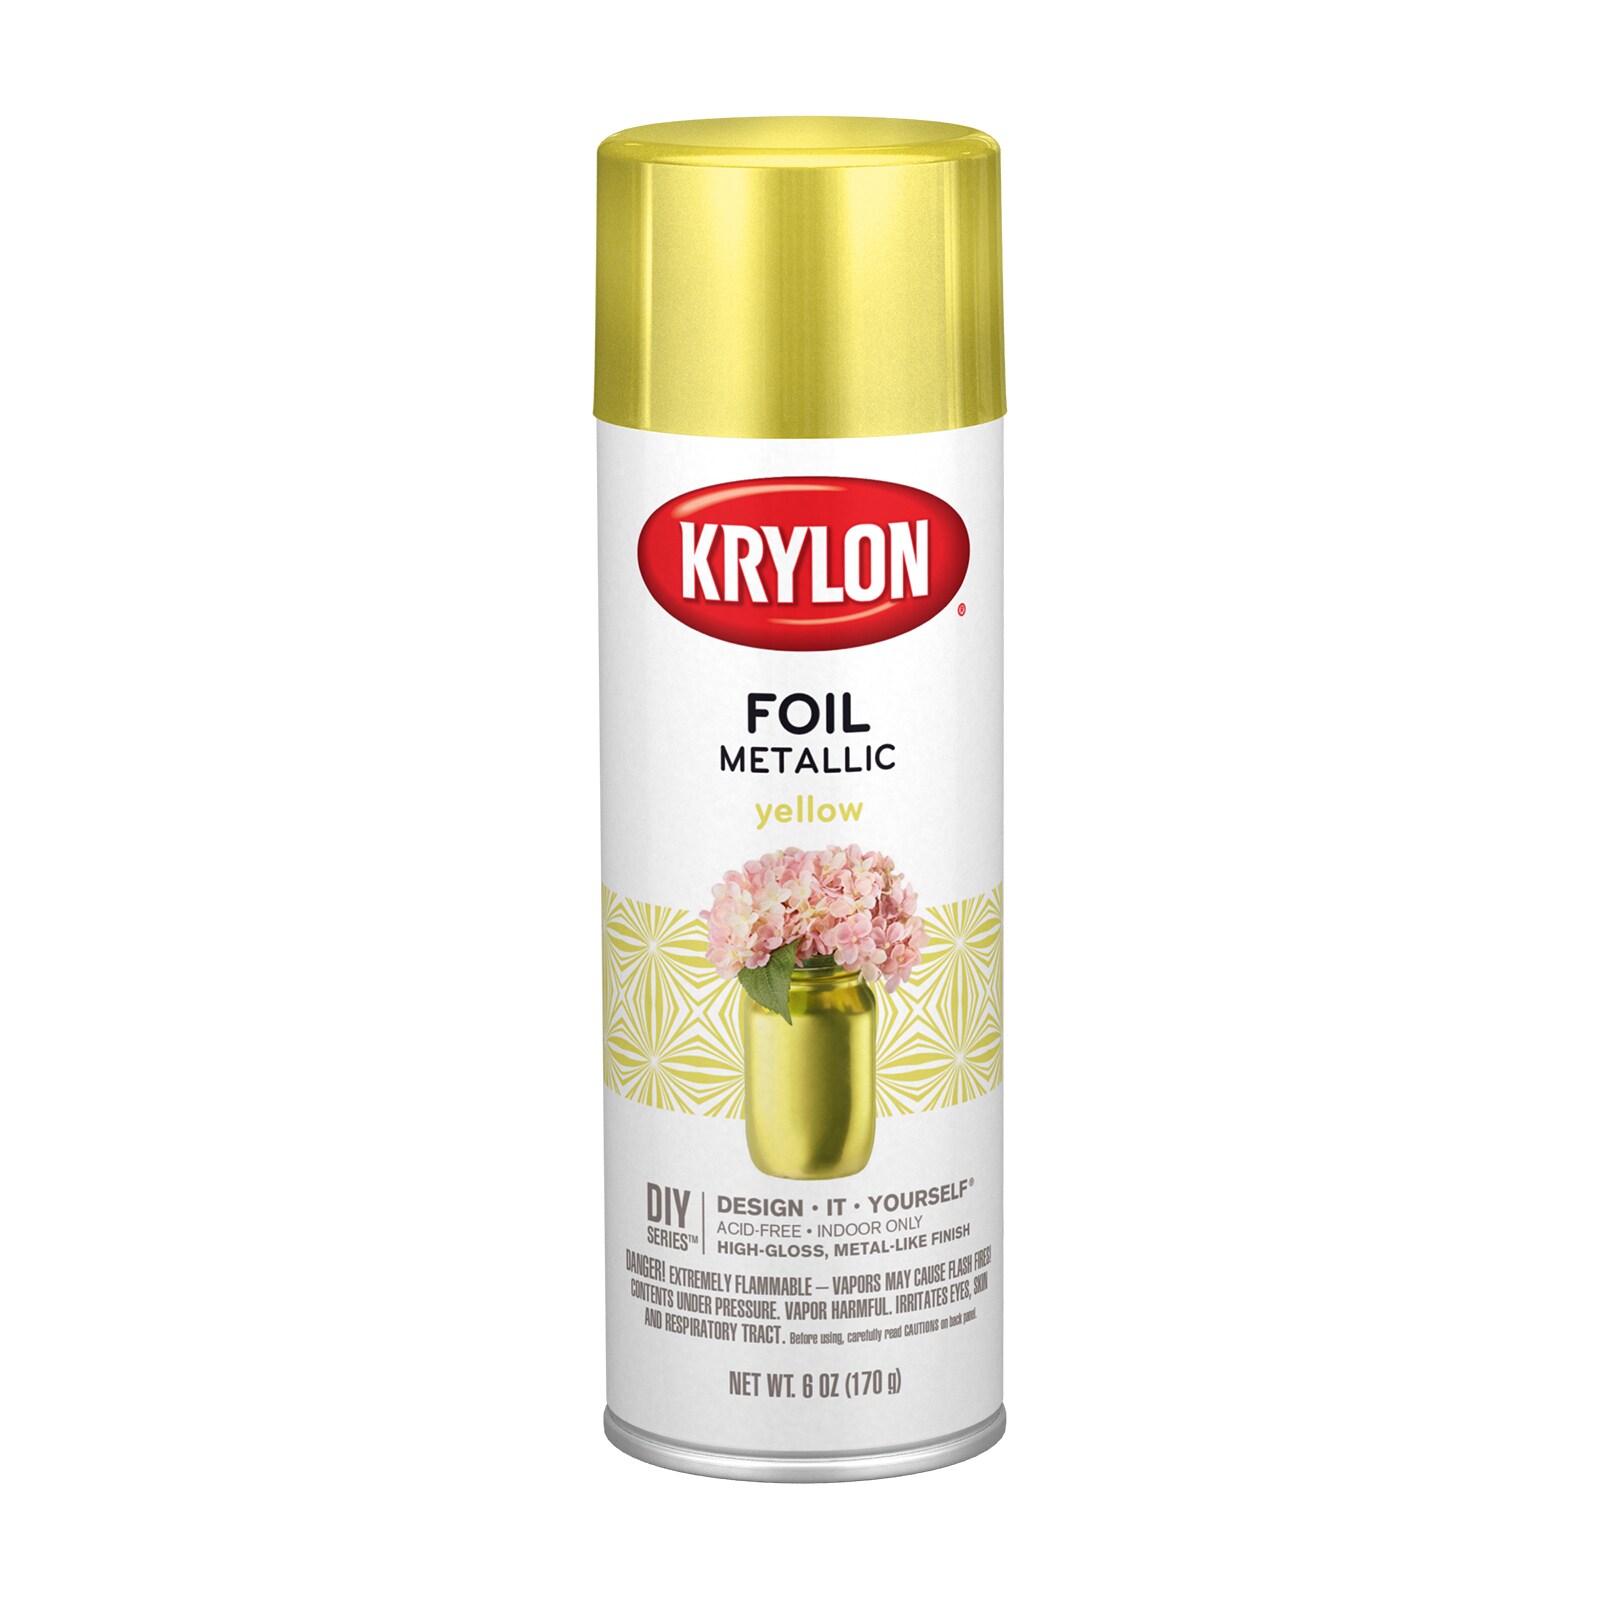 Krylon Gloss 18 Kt. Gold Spray Paint (NET WT. 12-oz) in the Spray